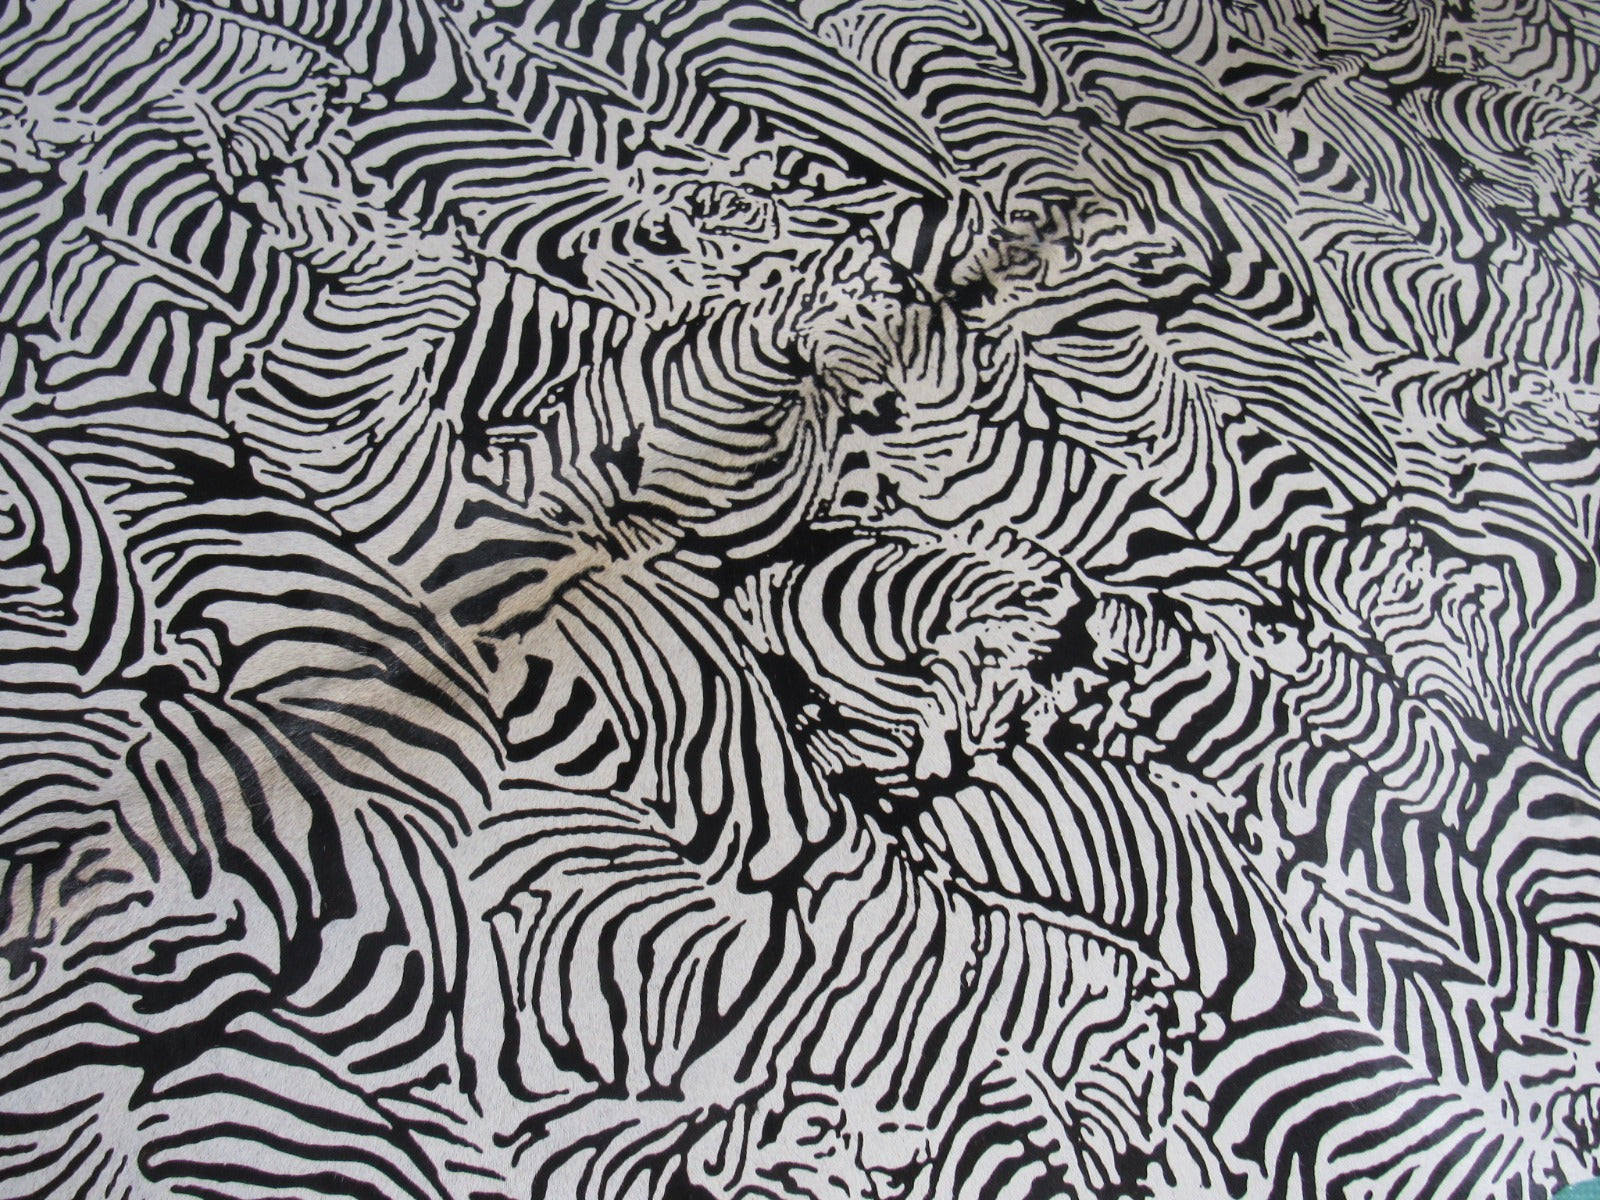 Zebra Pattern Printed Cowhide Rug Size: 7x5 1/4 feet M-1125